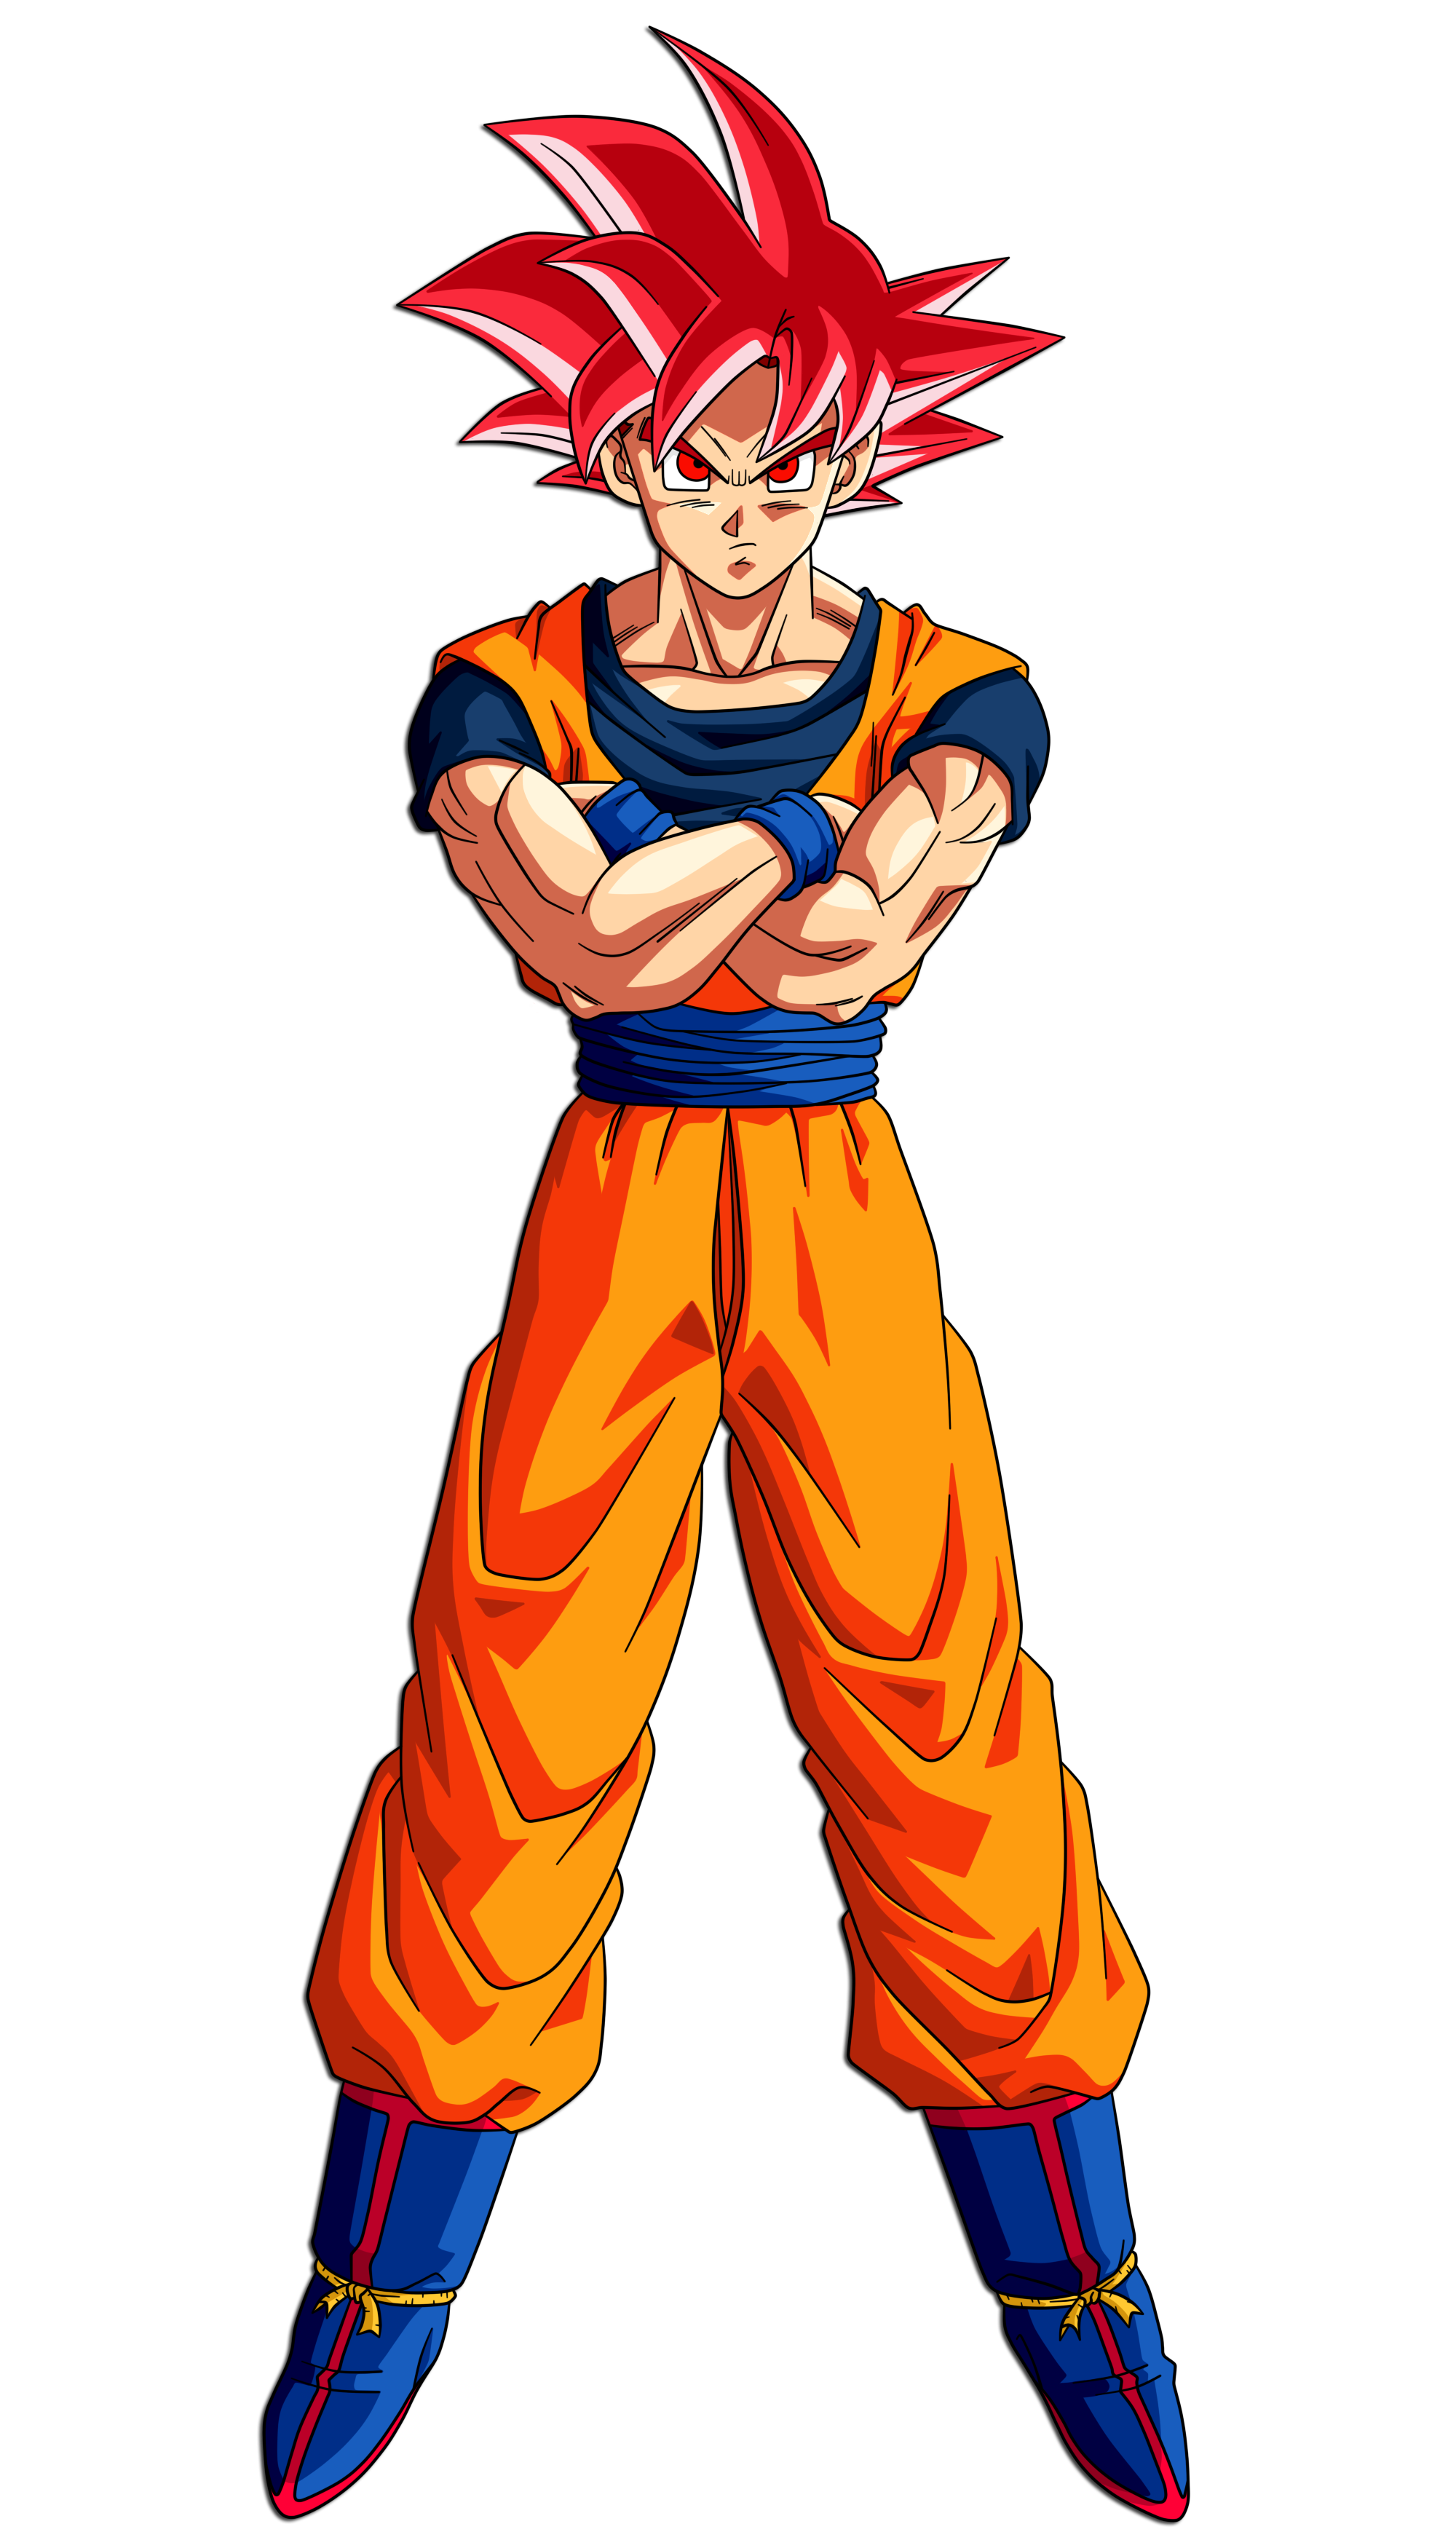 Goku (Super Saiyan God) by hirus4drawing on DeviantArt